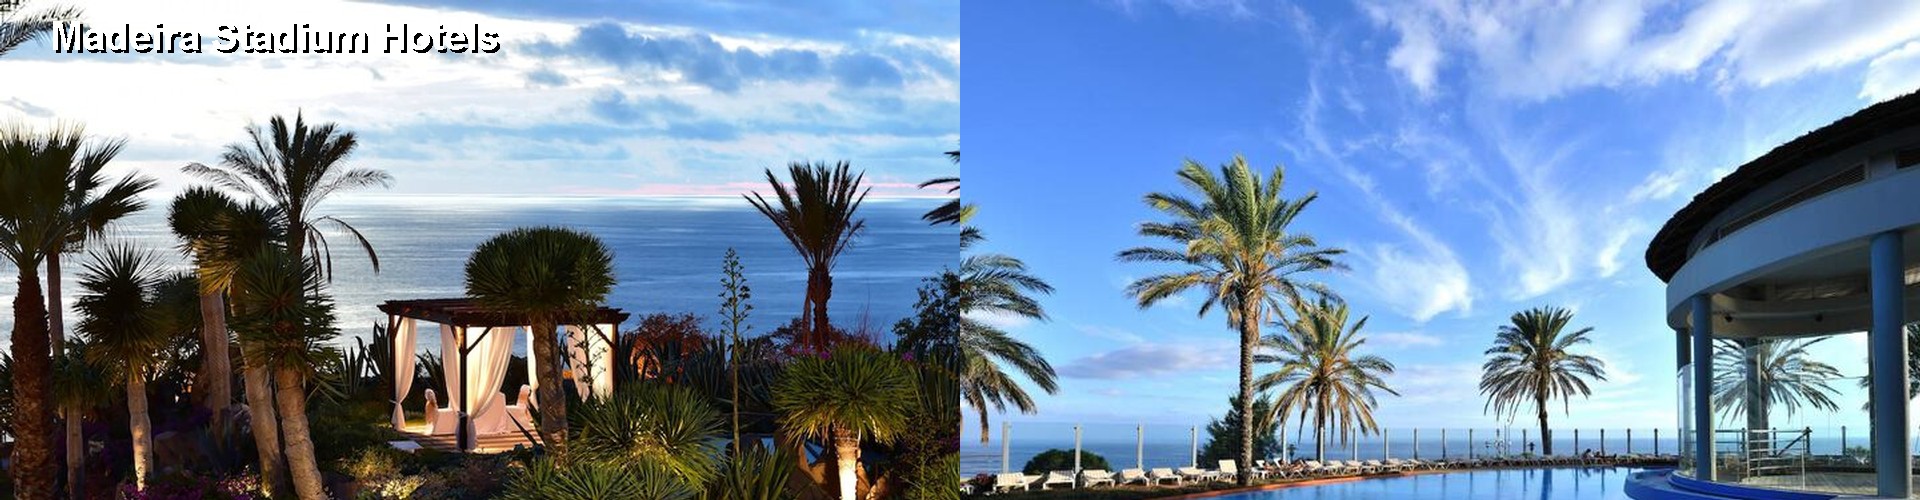 5 Best Hotels near Madeira Stadium